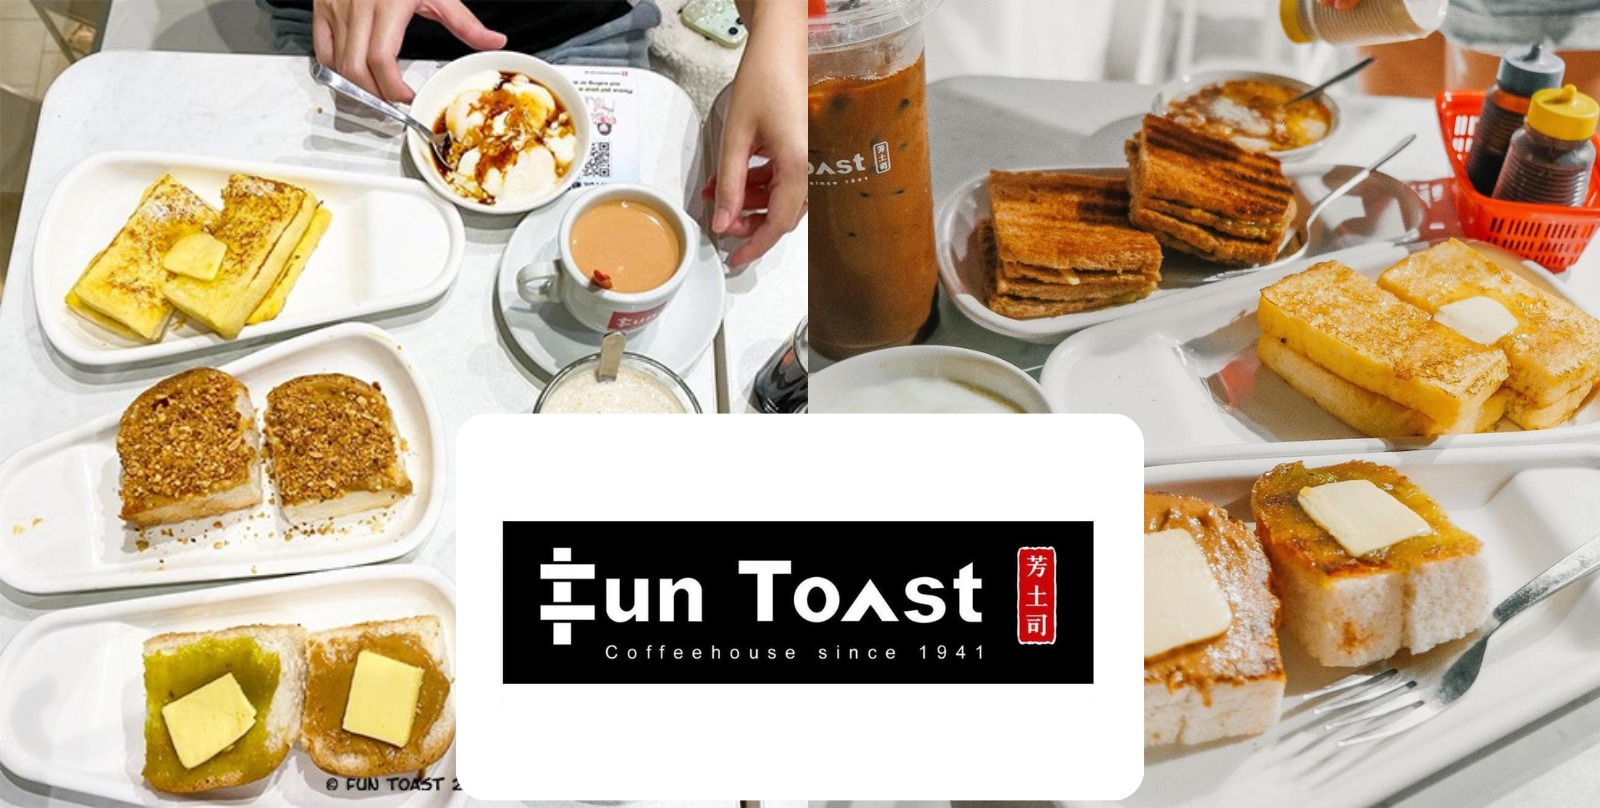 Fun toast menu